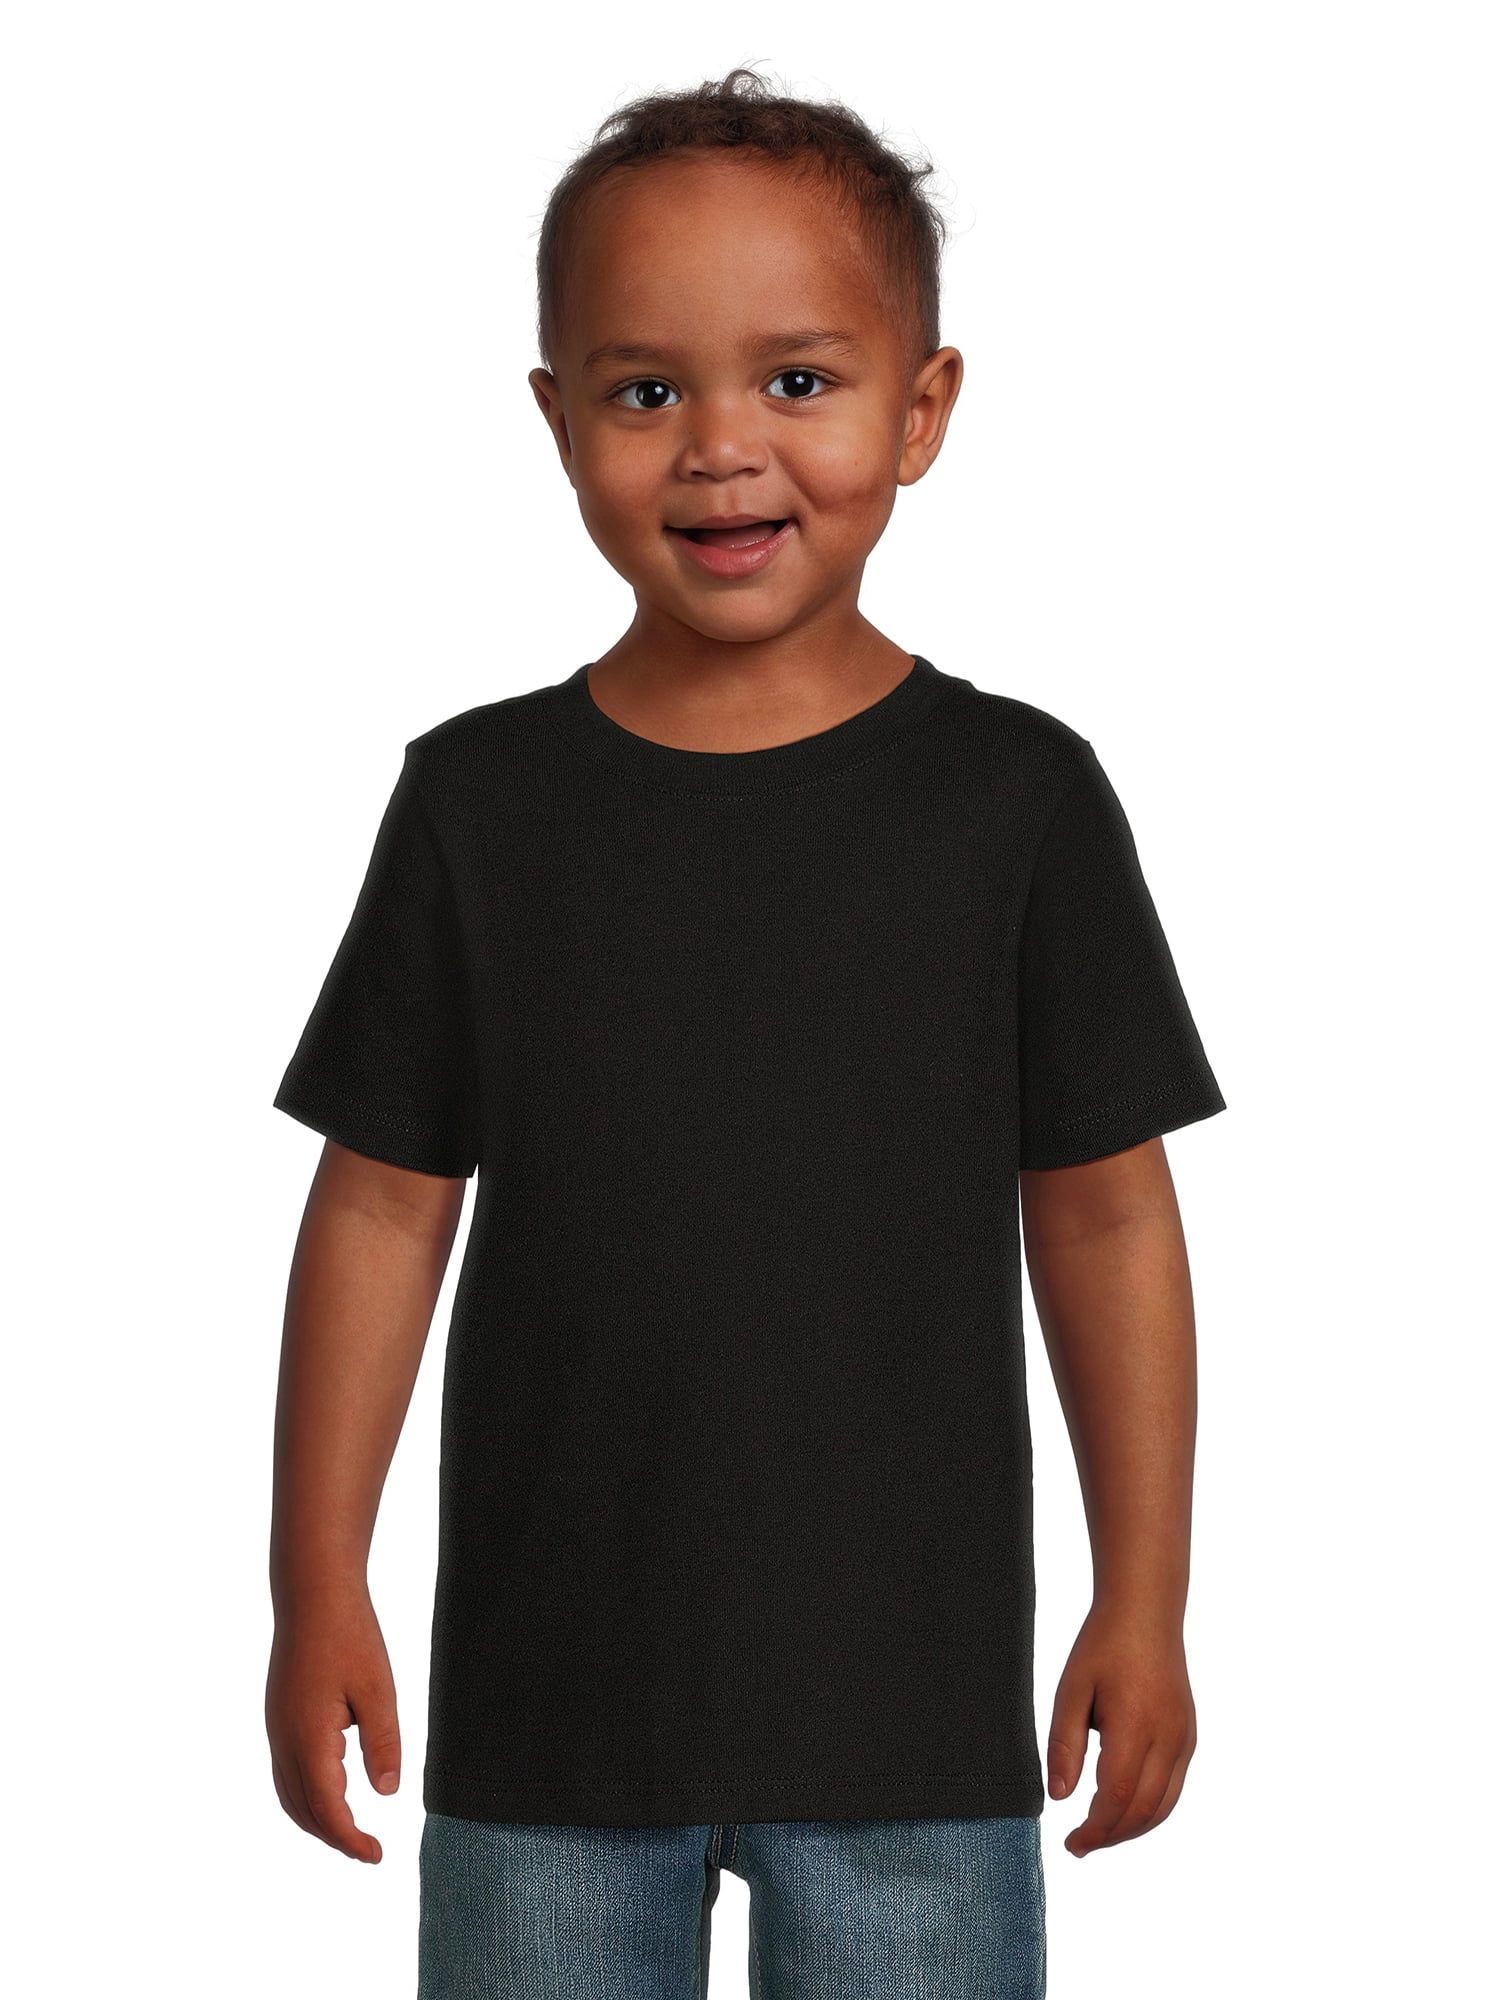 Garanimals Toddler Boy Short Sleeve Solid T-Shirt, Sizes 12M-5T | Walmart (US)